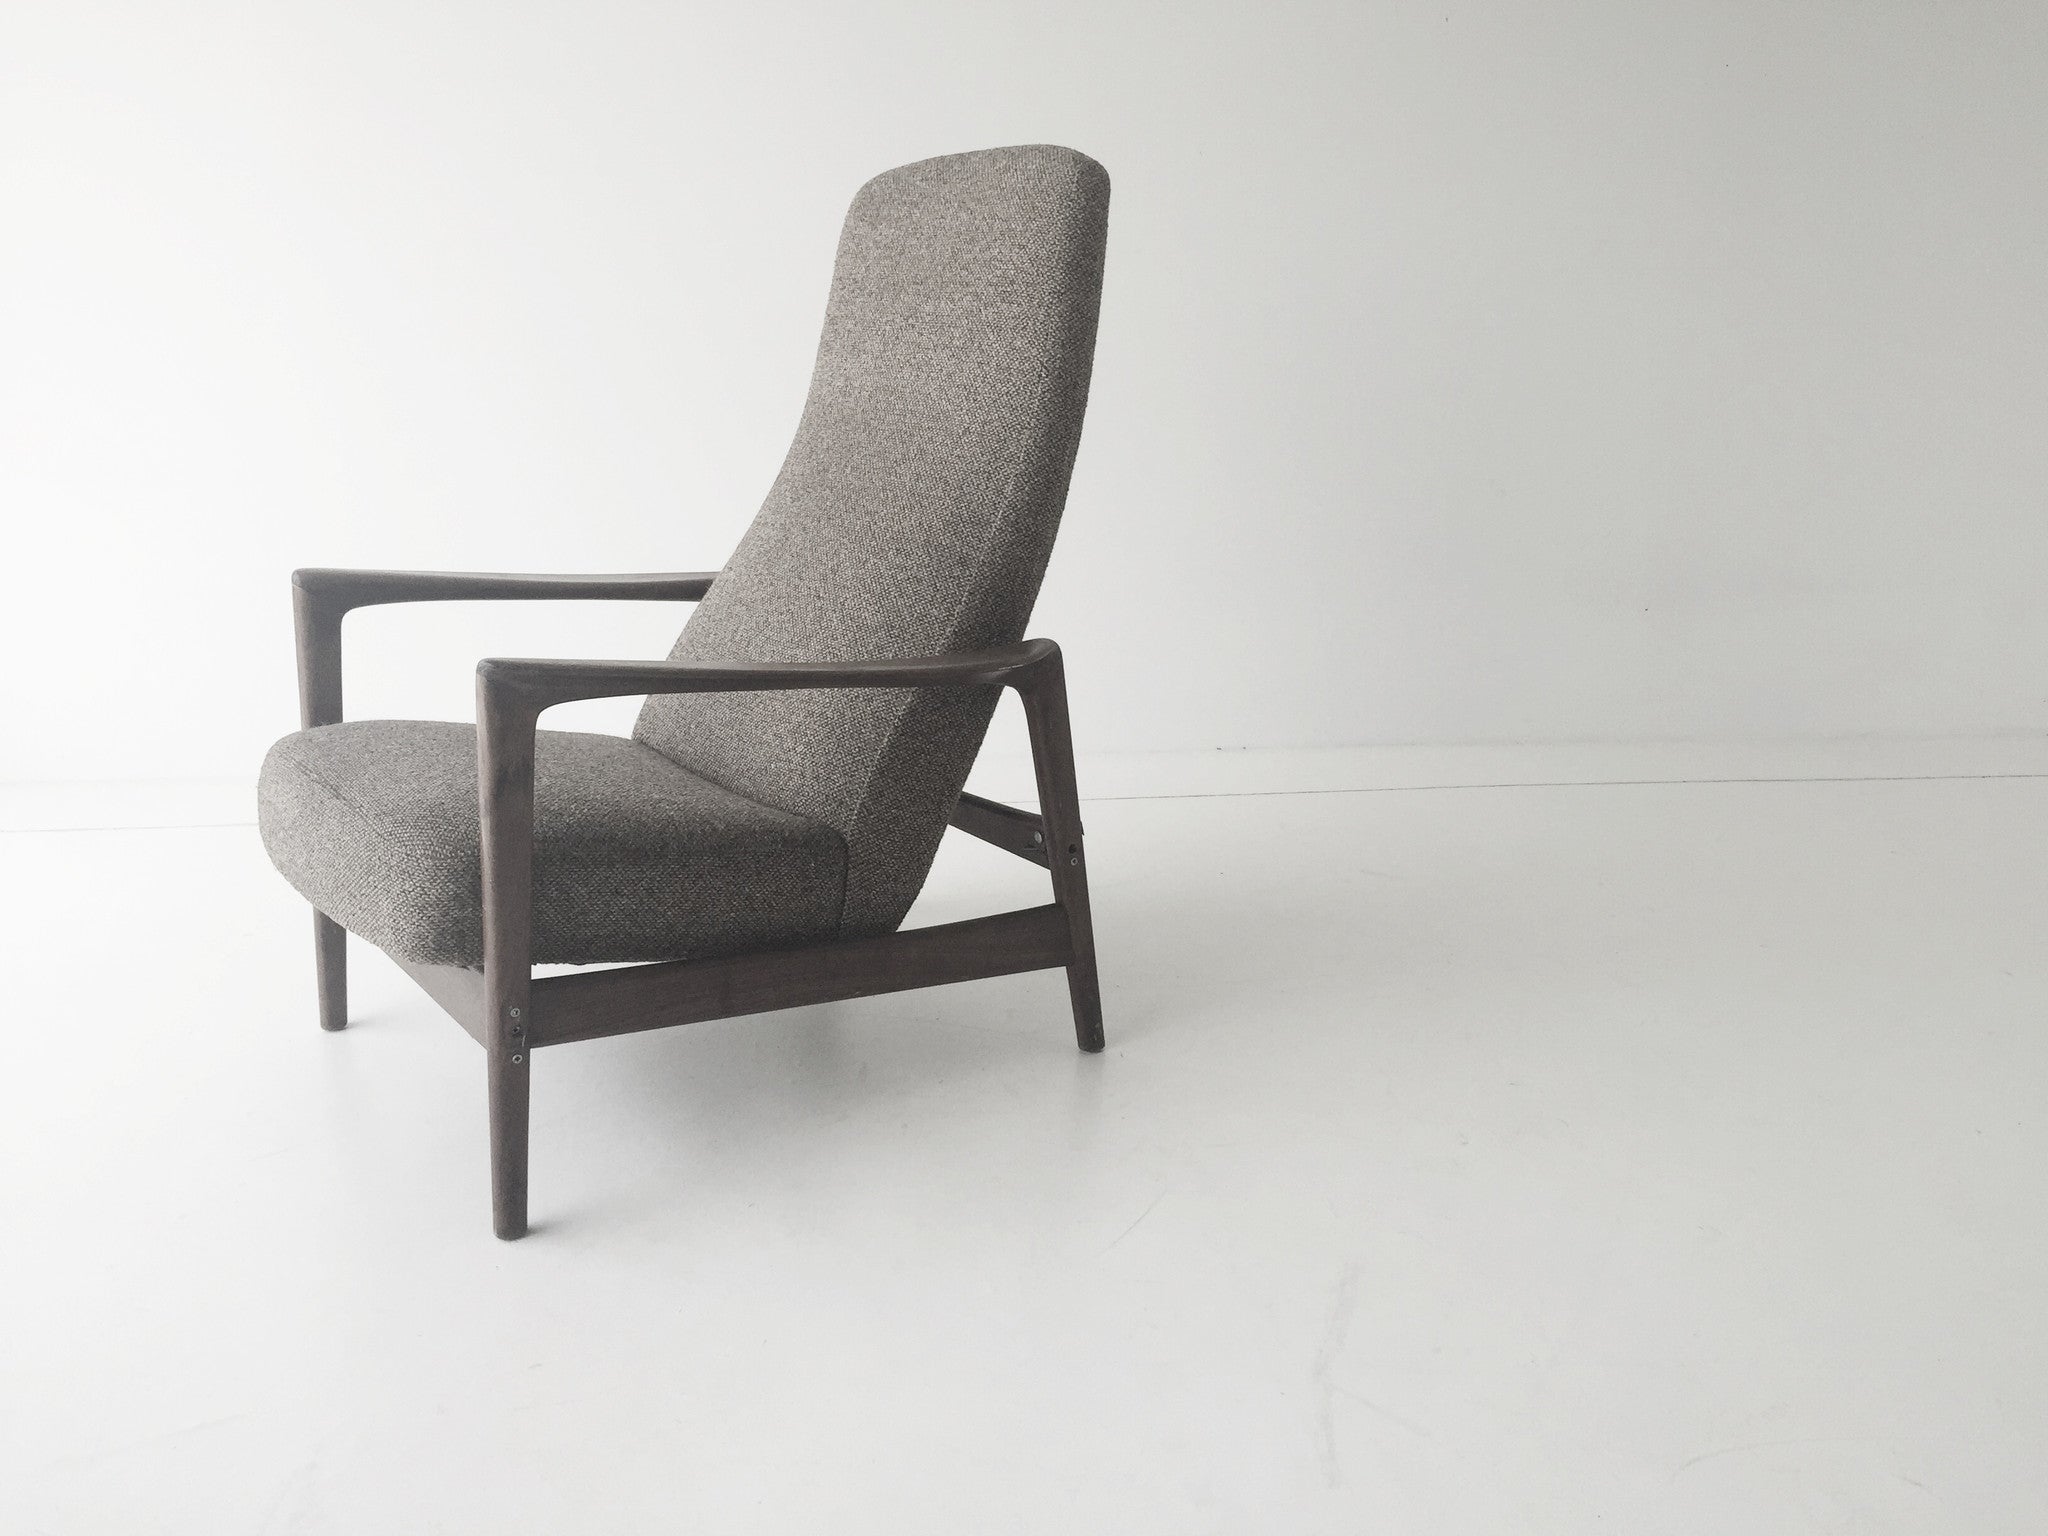 Alf-Svensson-Lounge-Chair-DUX-06031602-07